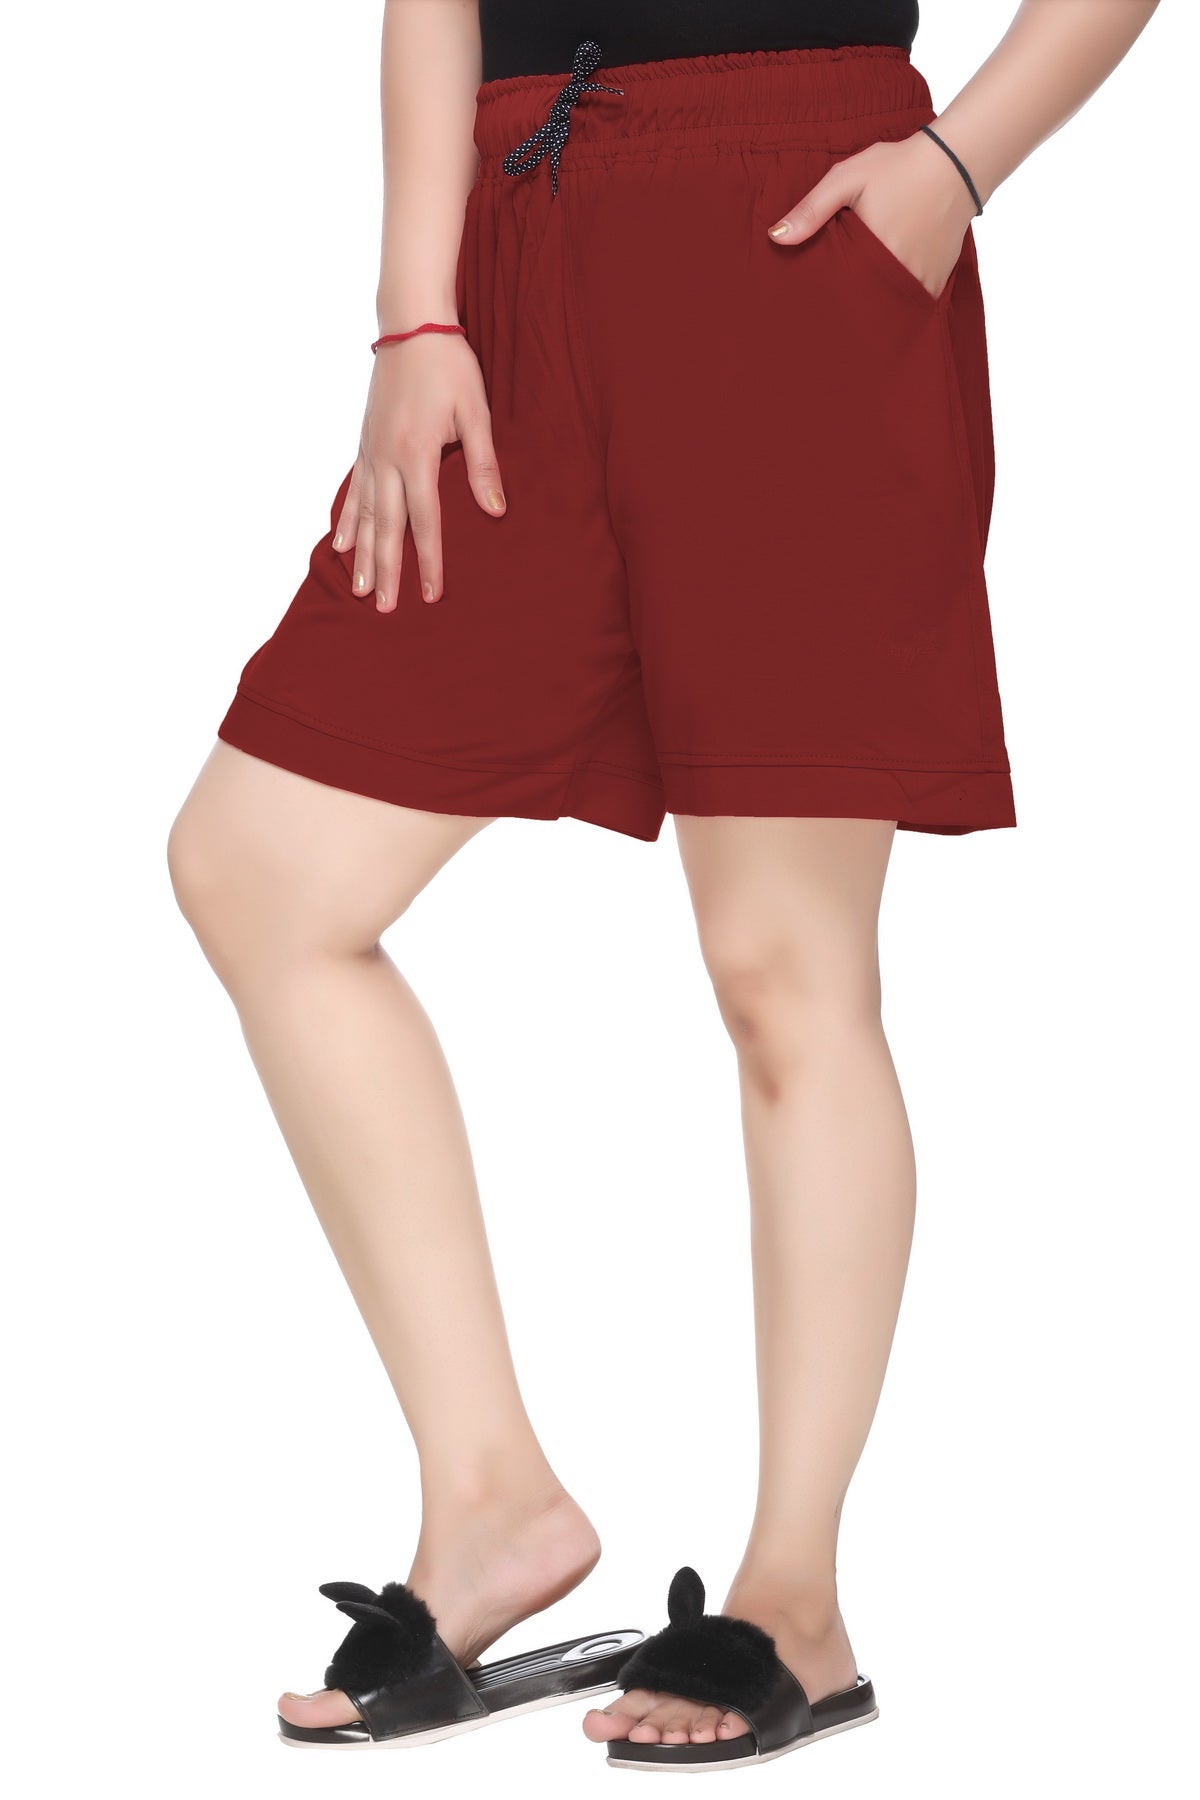 Stylish Maroon Cotton Shorts For Women online in India (Plain Bermuda)